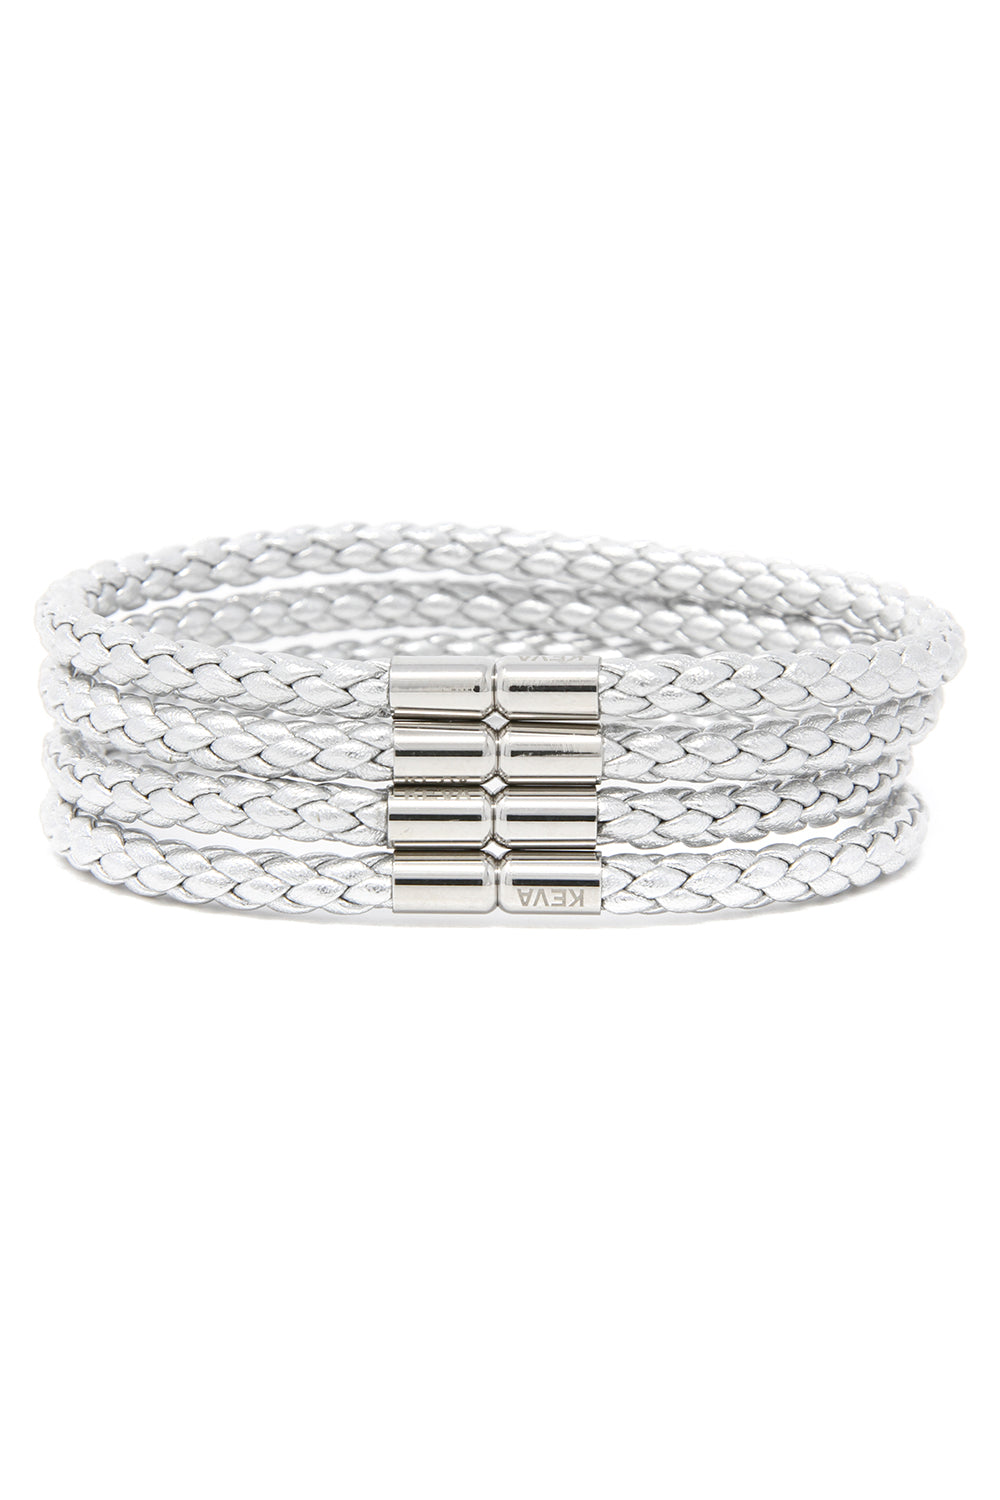 SIDEWALK SALE ITEM - Keva Braided Bracelet - Silver